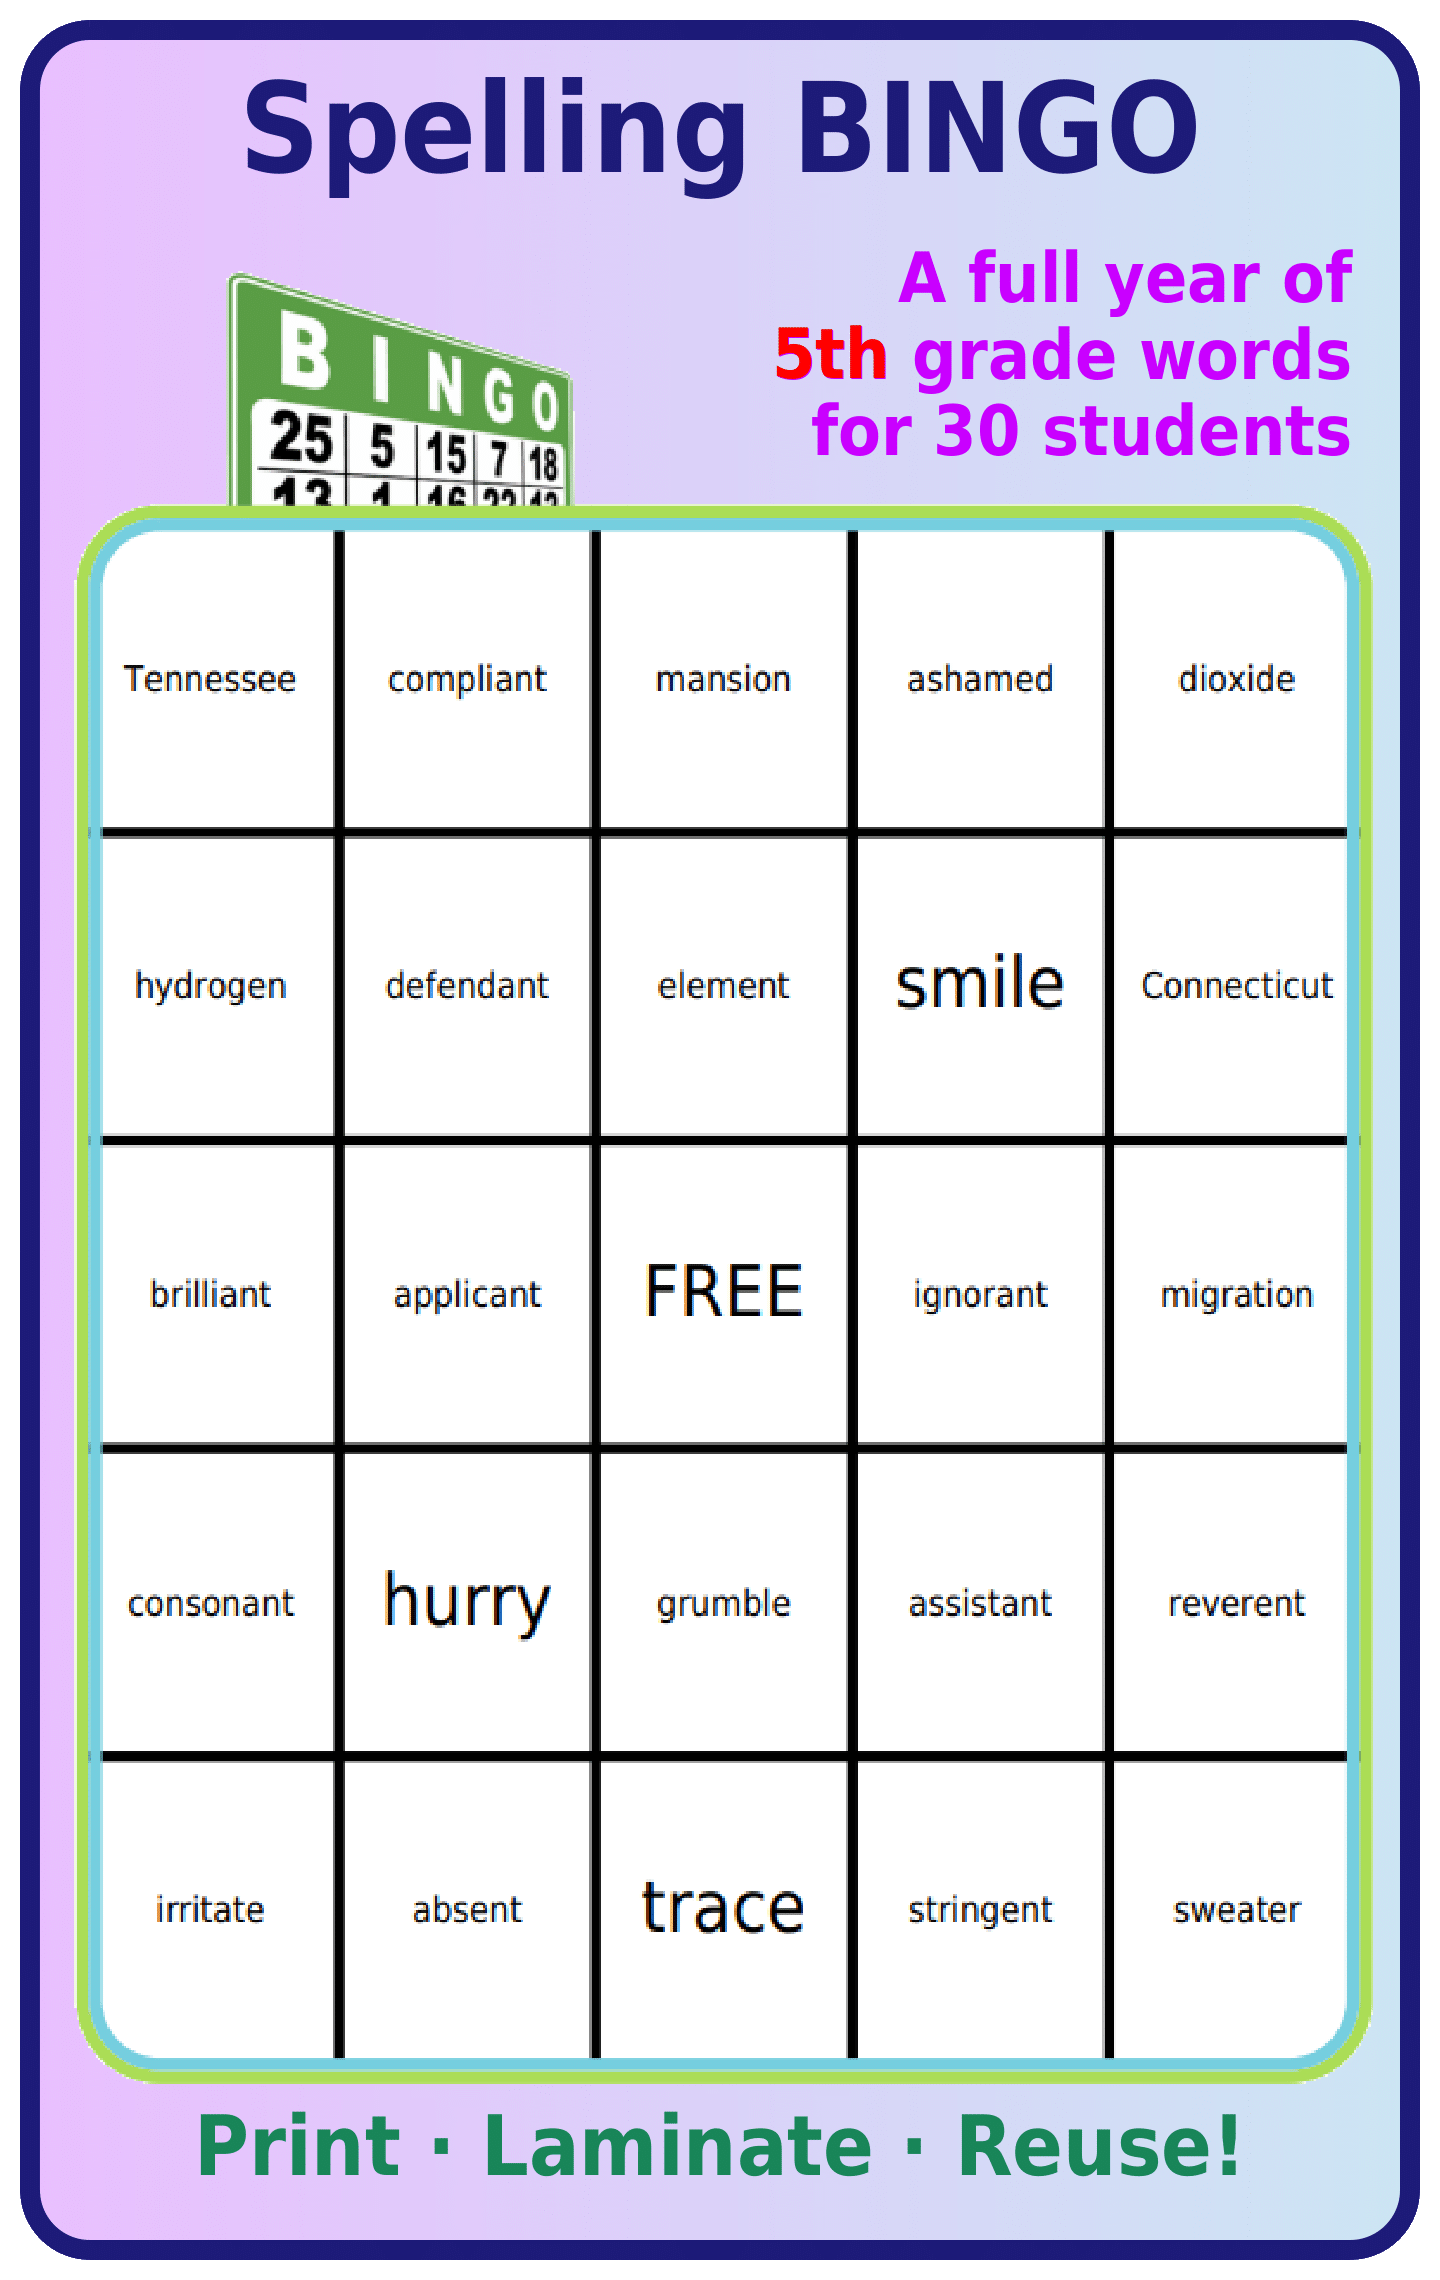 Bingo board with 5th grade spelling words